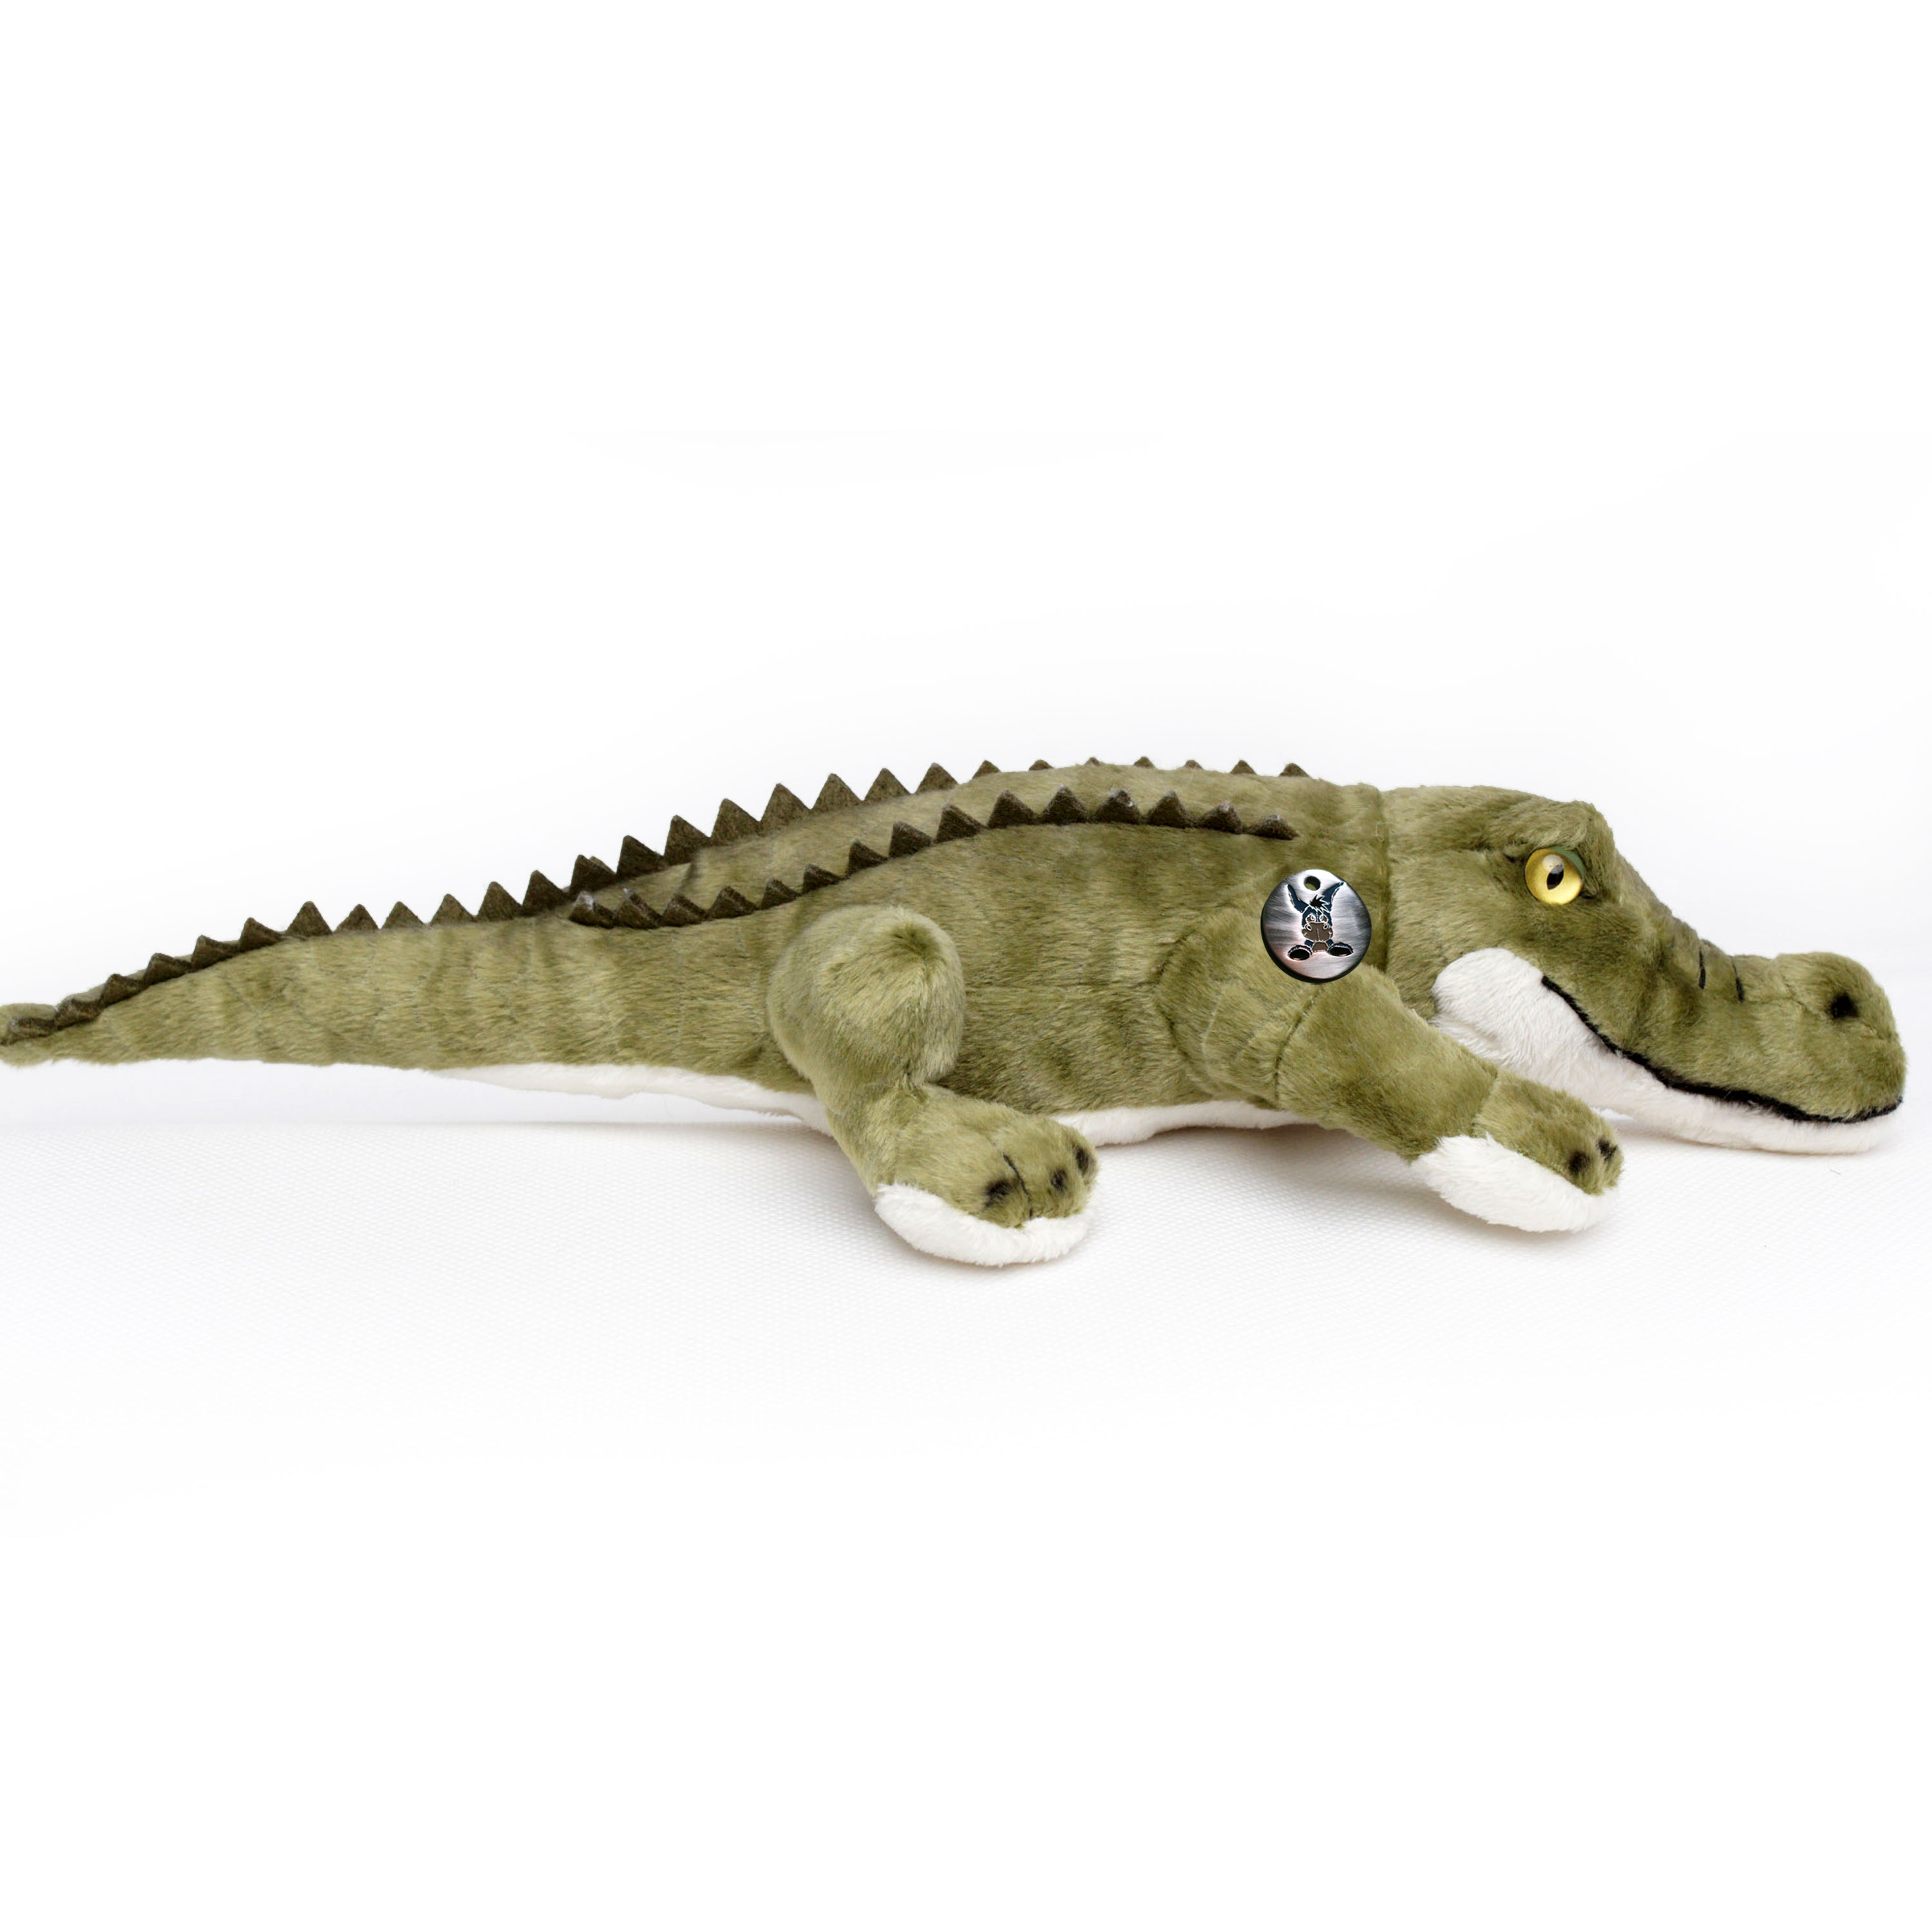 Krokodil SCHNAPPI Alligator 32 cm Plüschtier Kuscheltier Plüschkrokodil 